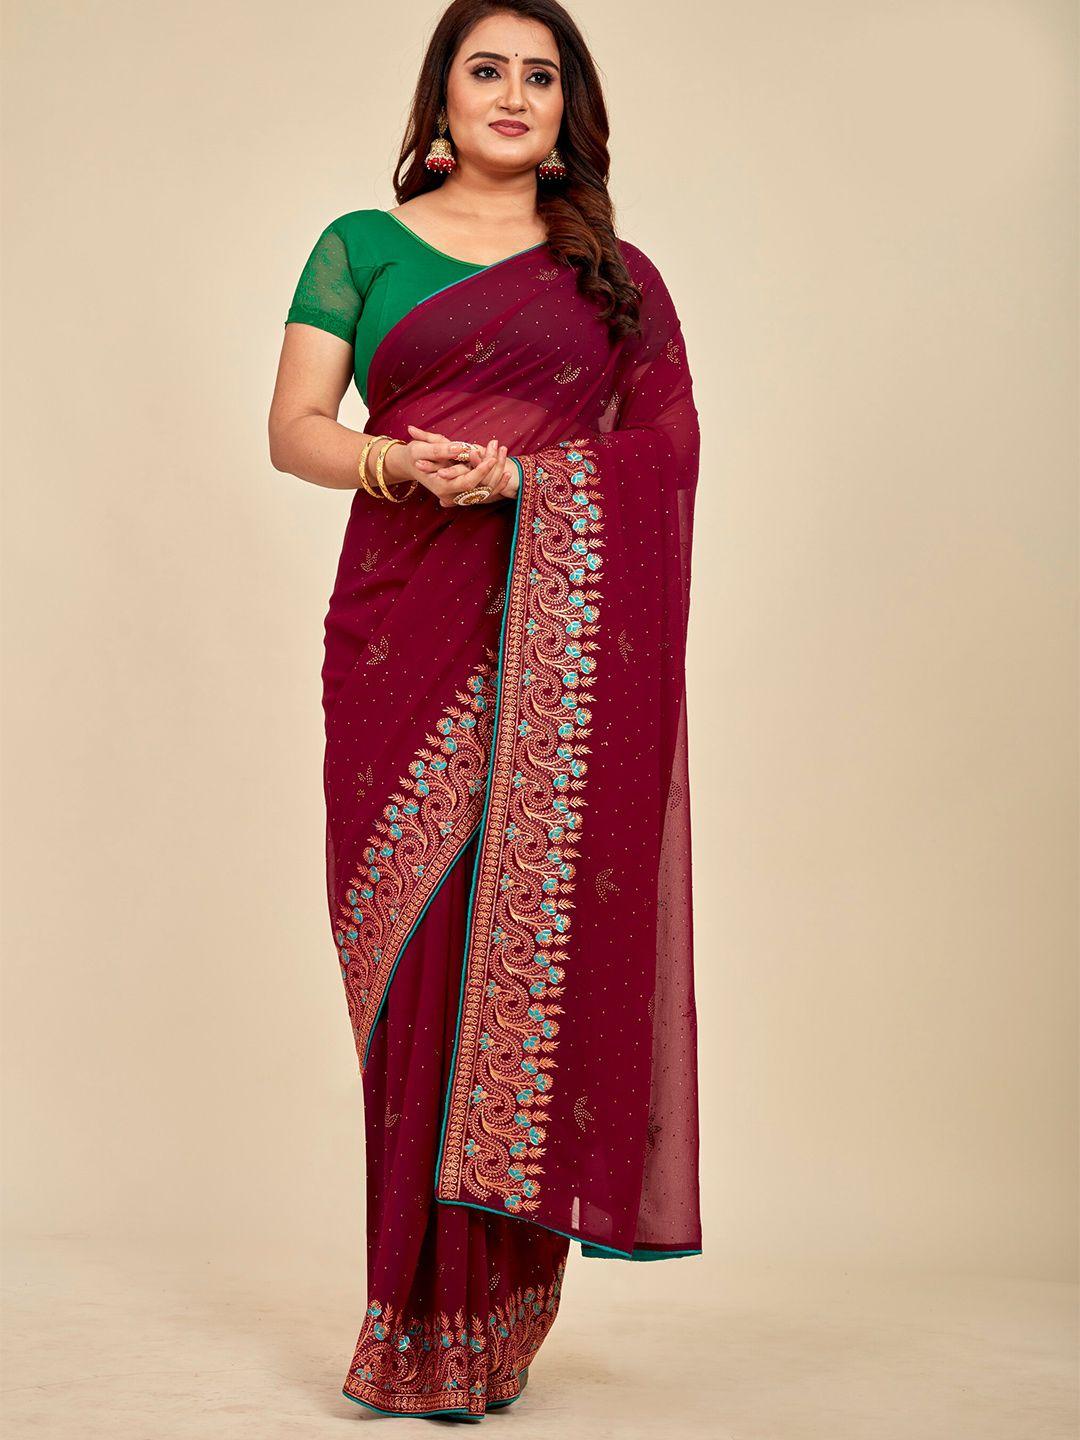 mahalasa magenta embellished embroidered pure georgette designer saree